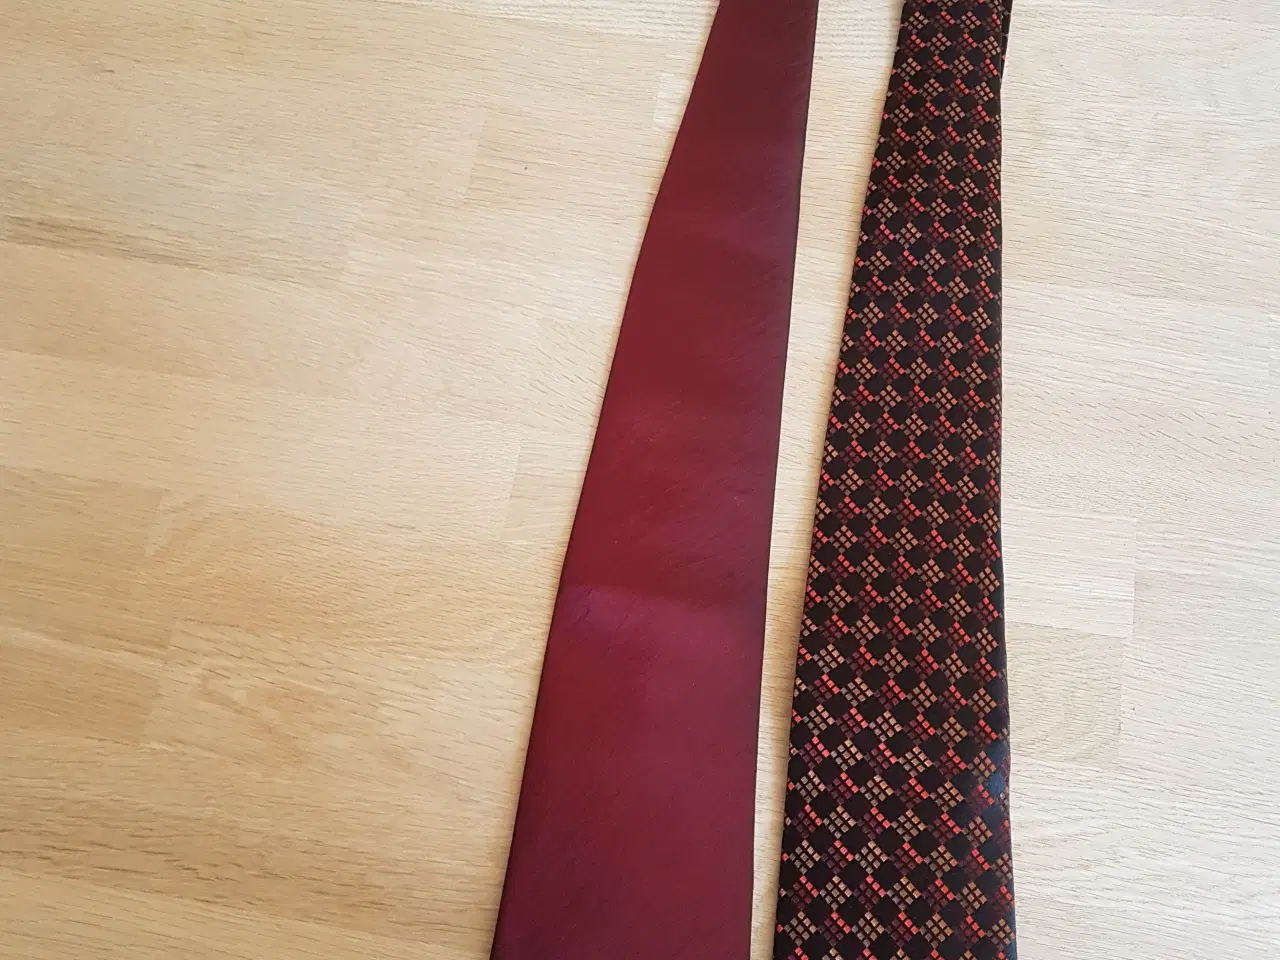 Billede 1 - To fine slips